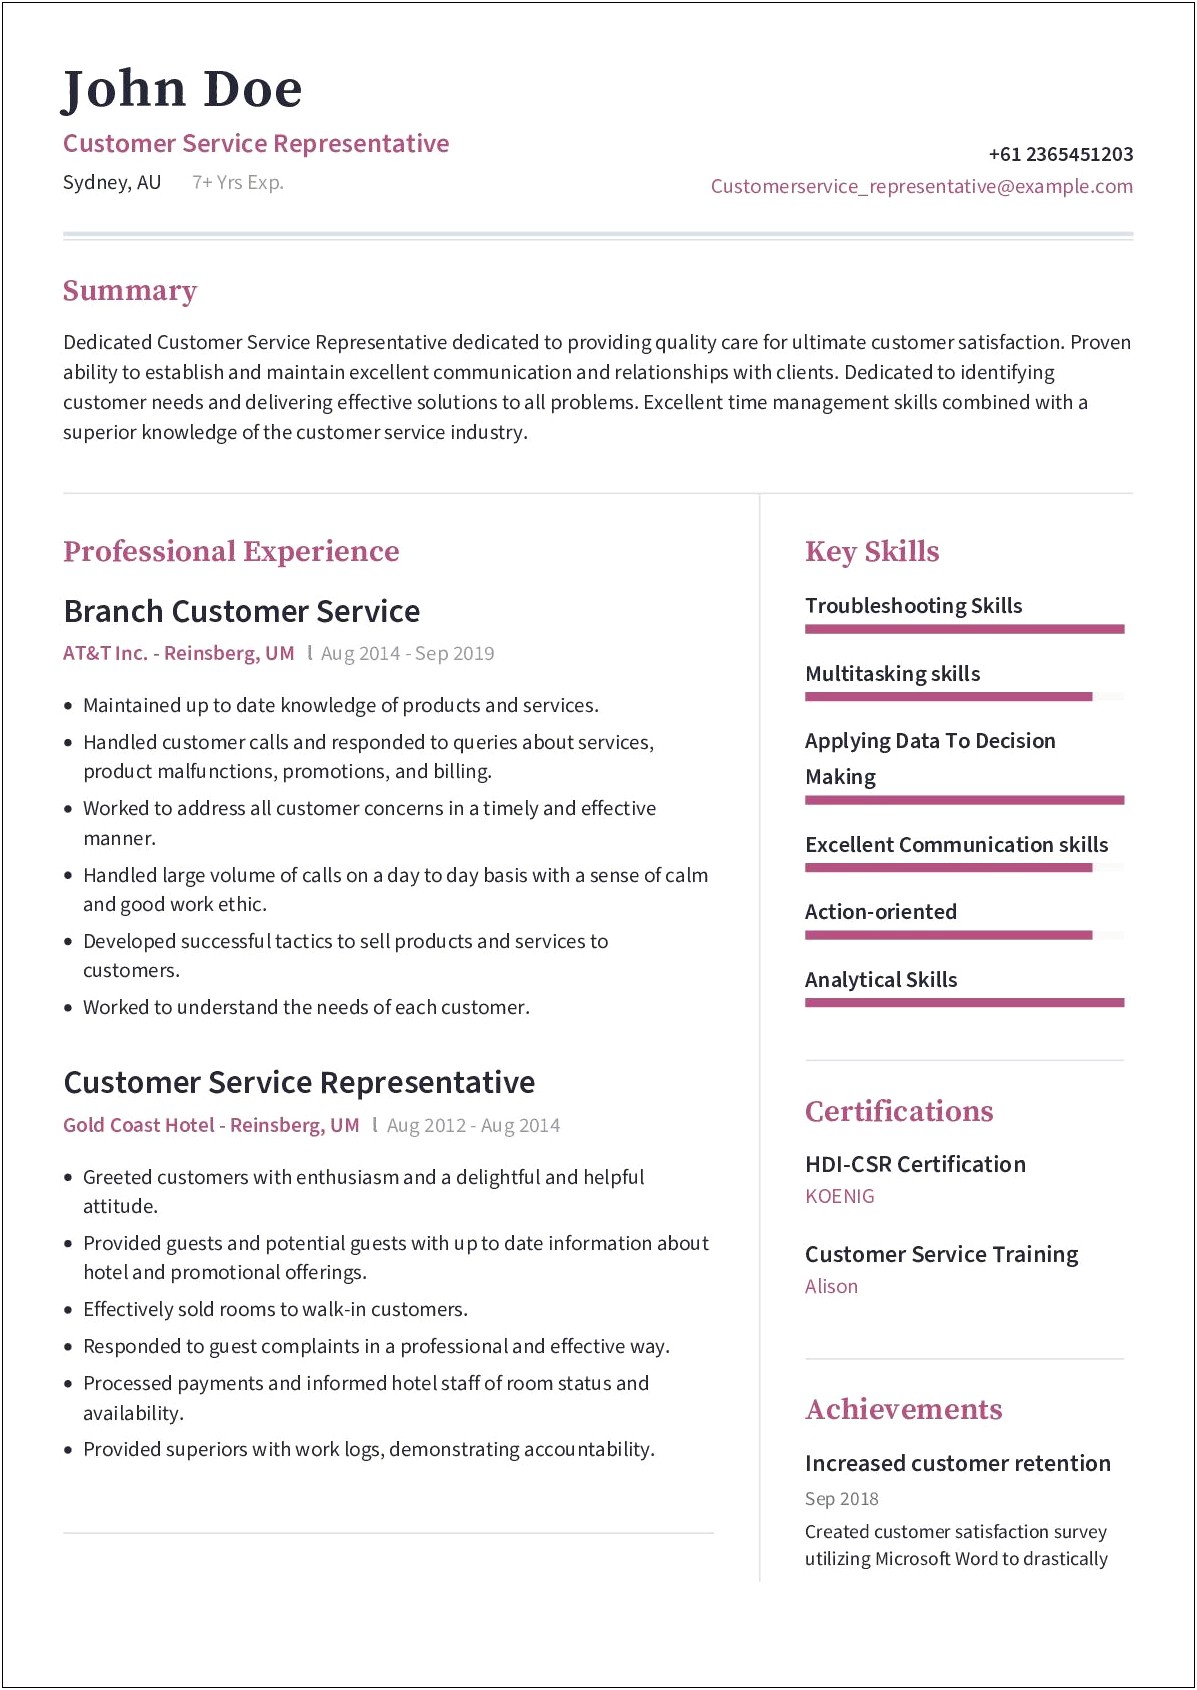 Customer Service Representative Job Duties For Resume